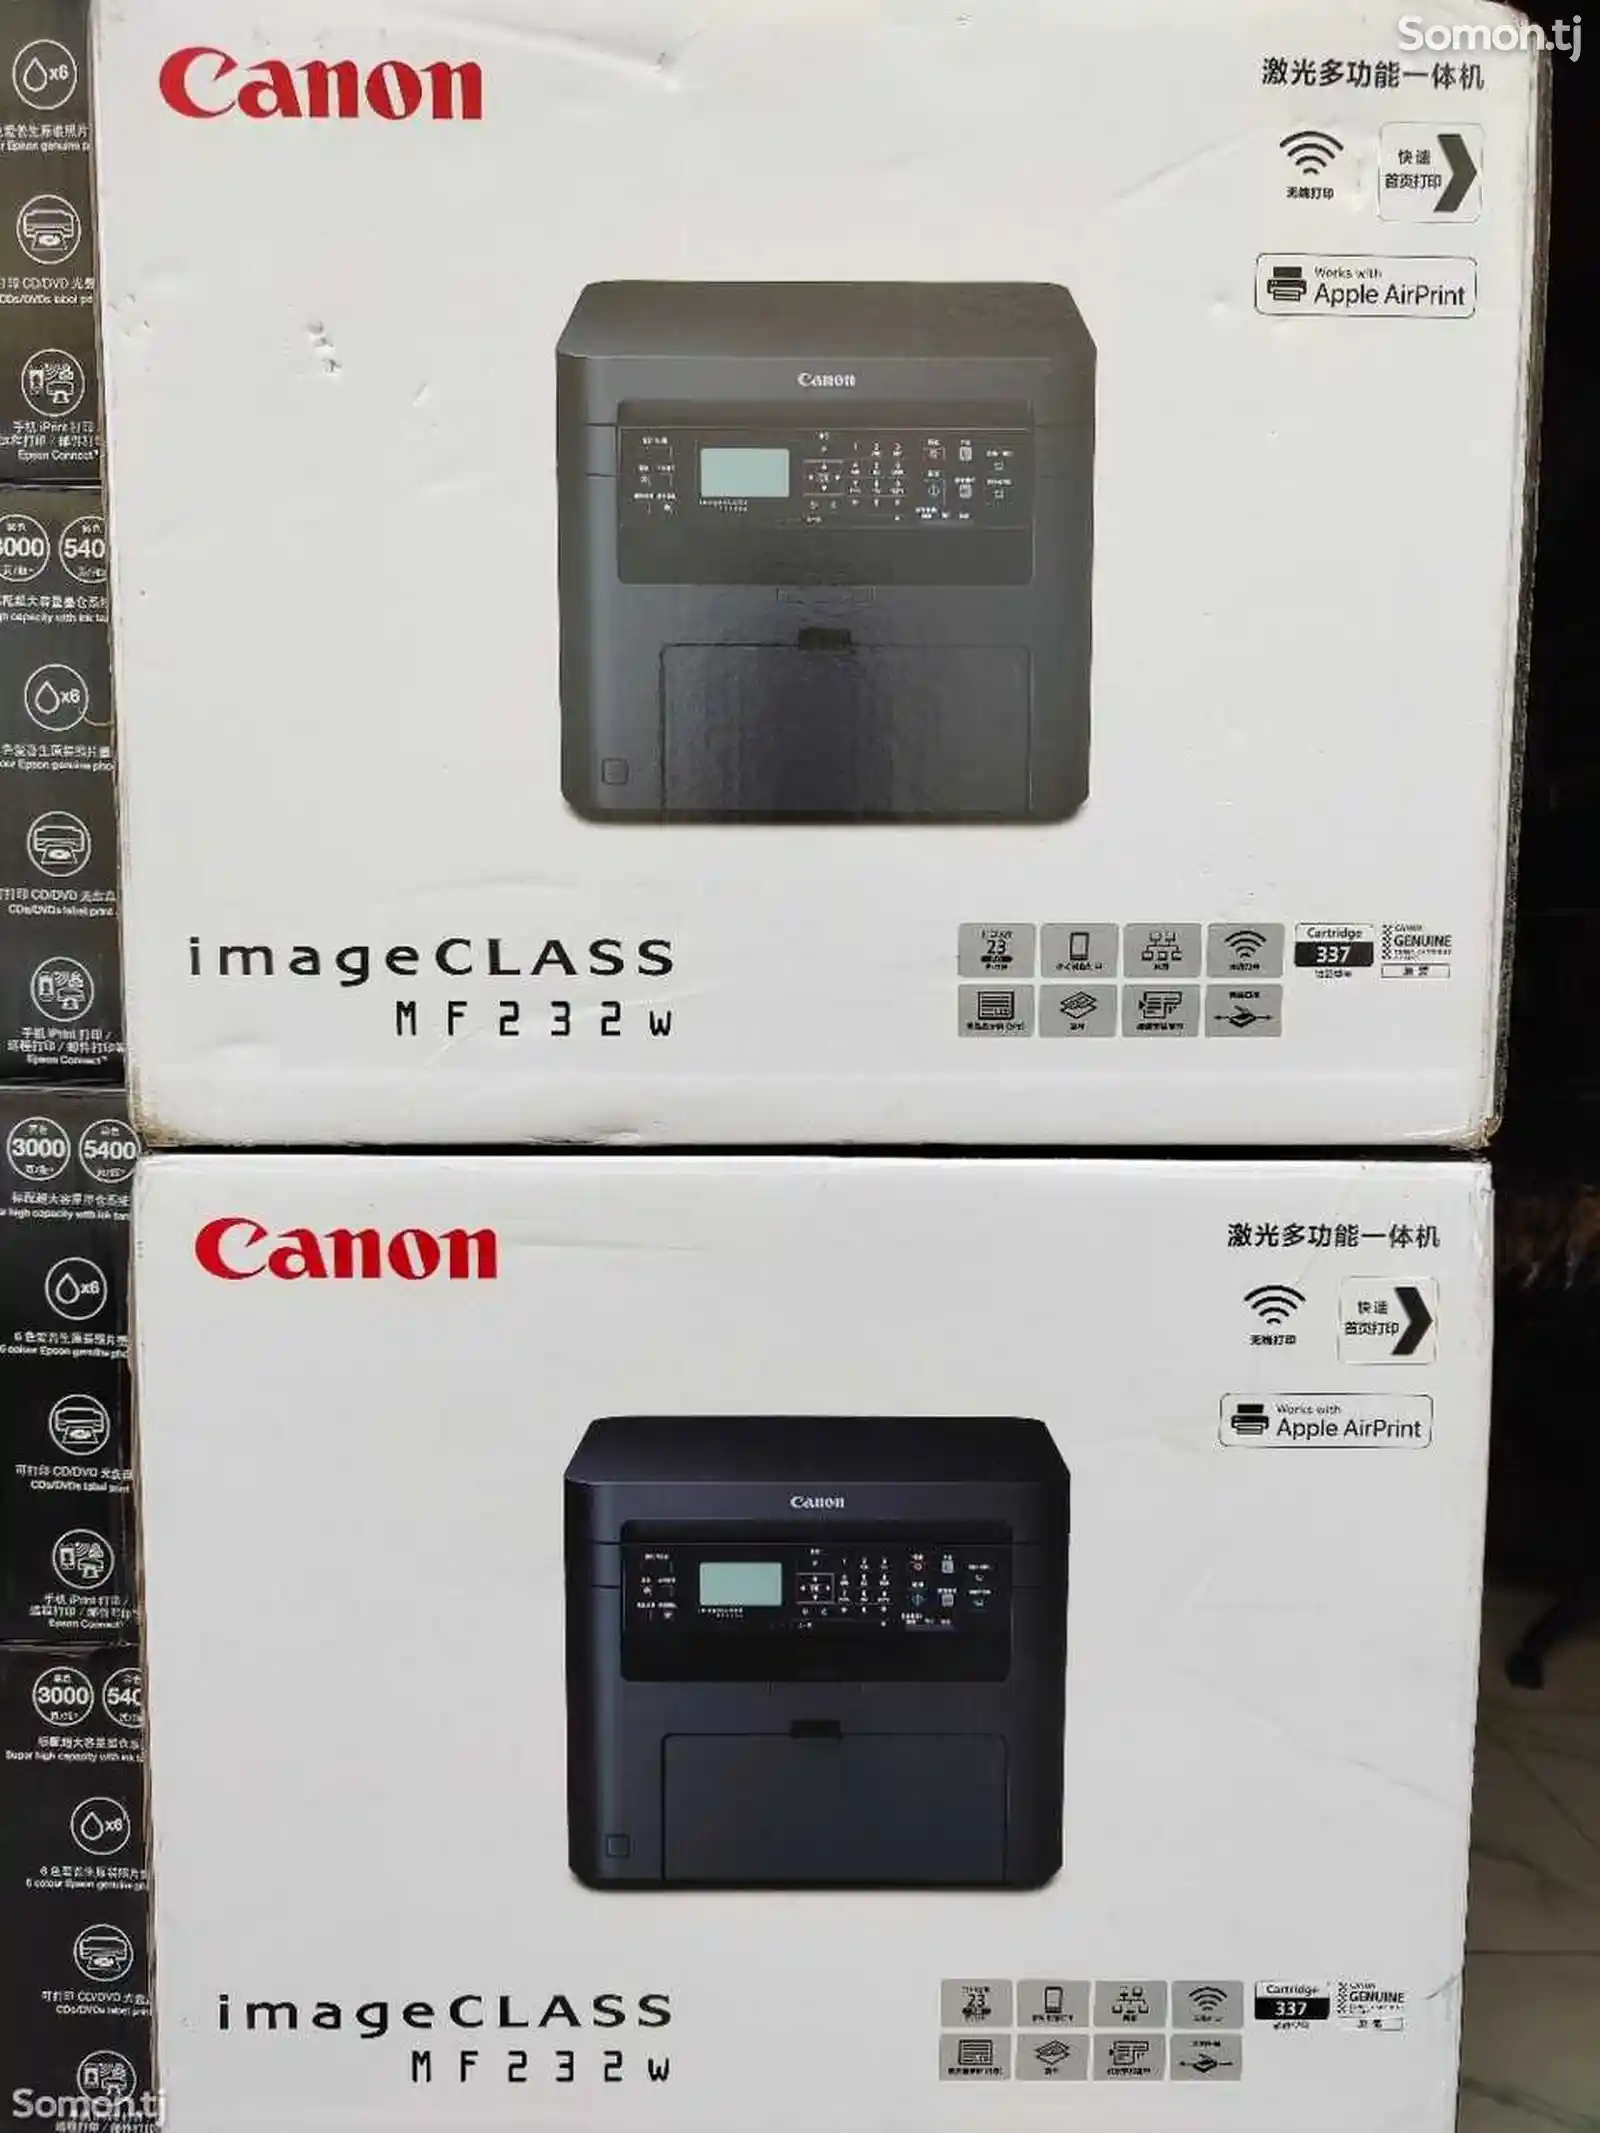 Принтер Canon image Class mf232w с WiFi-1